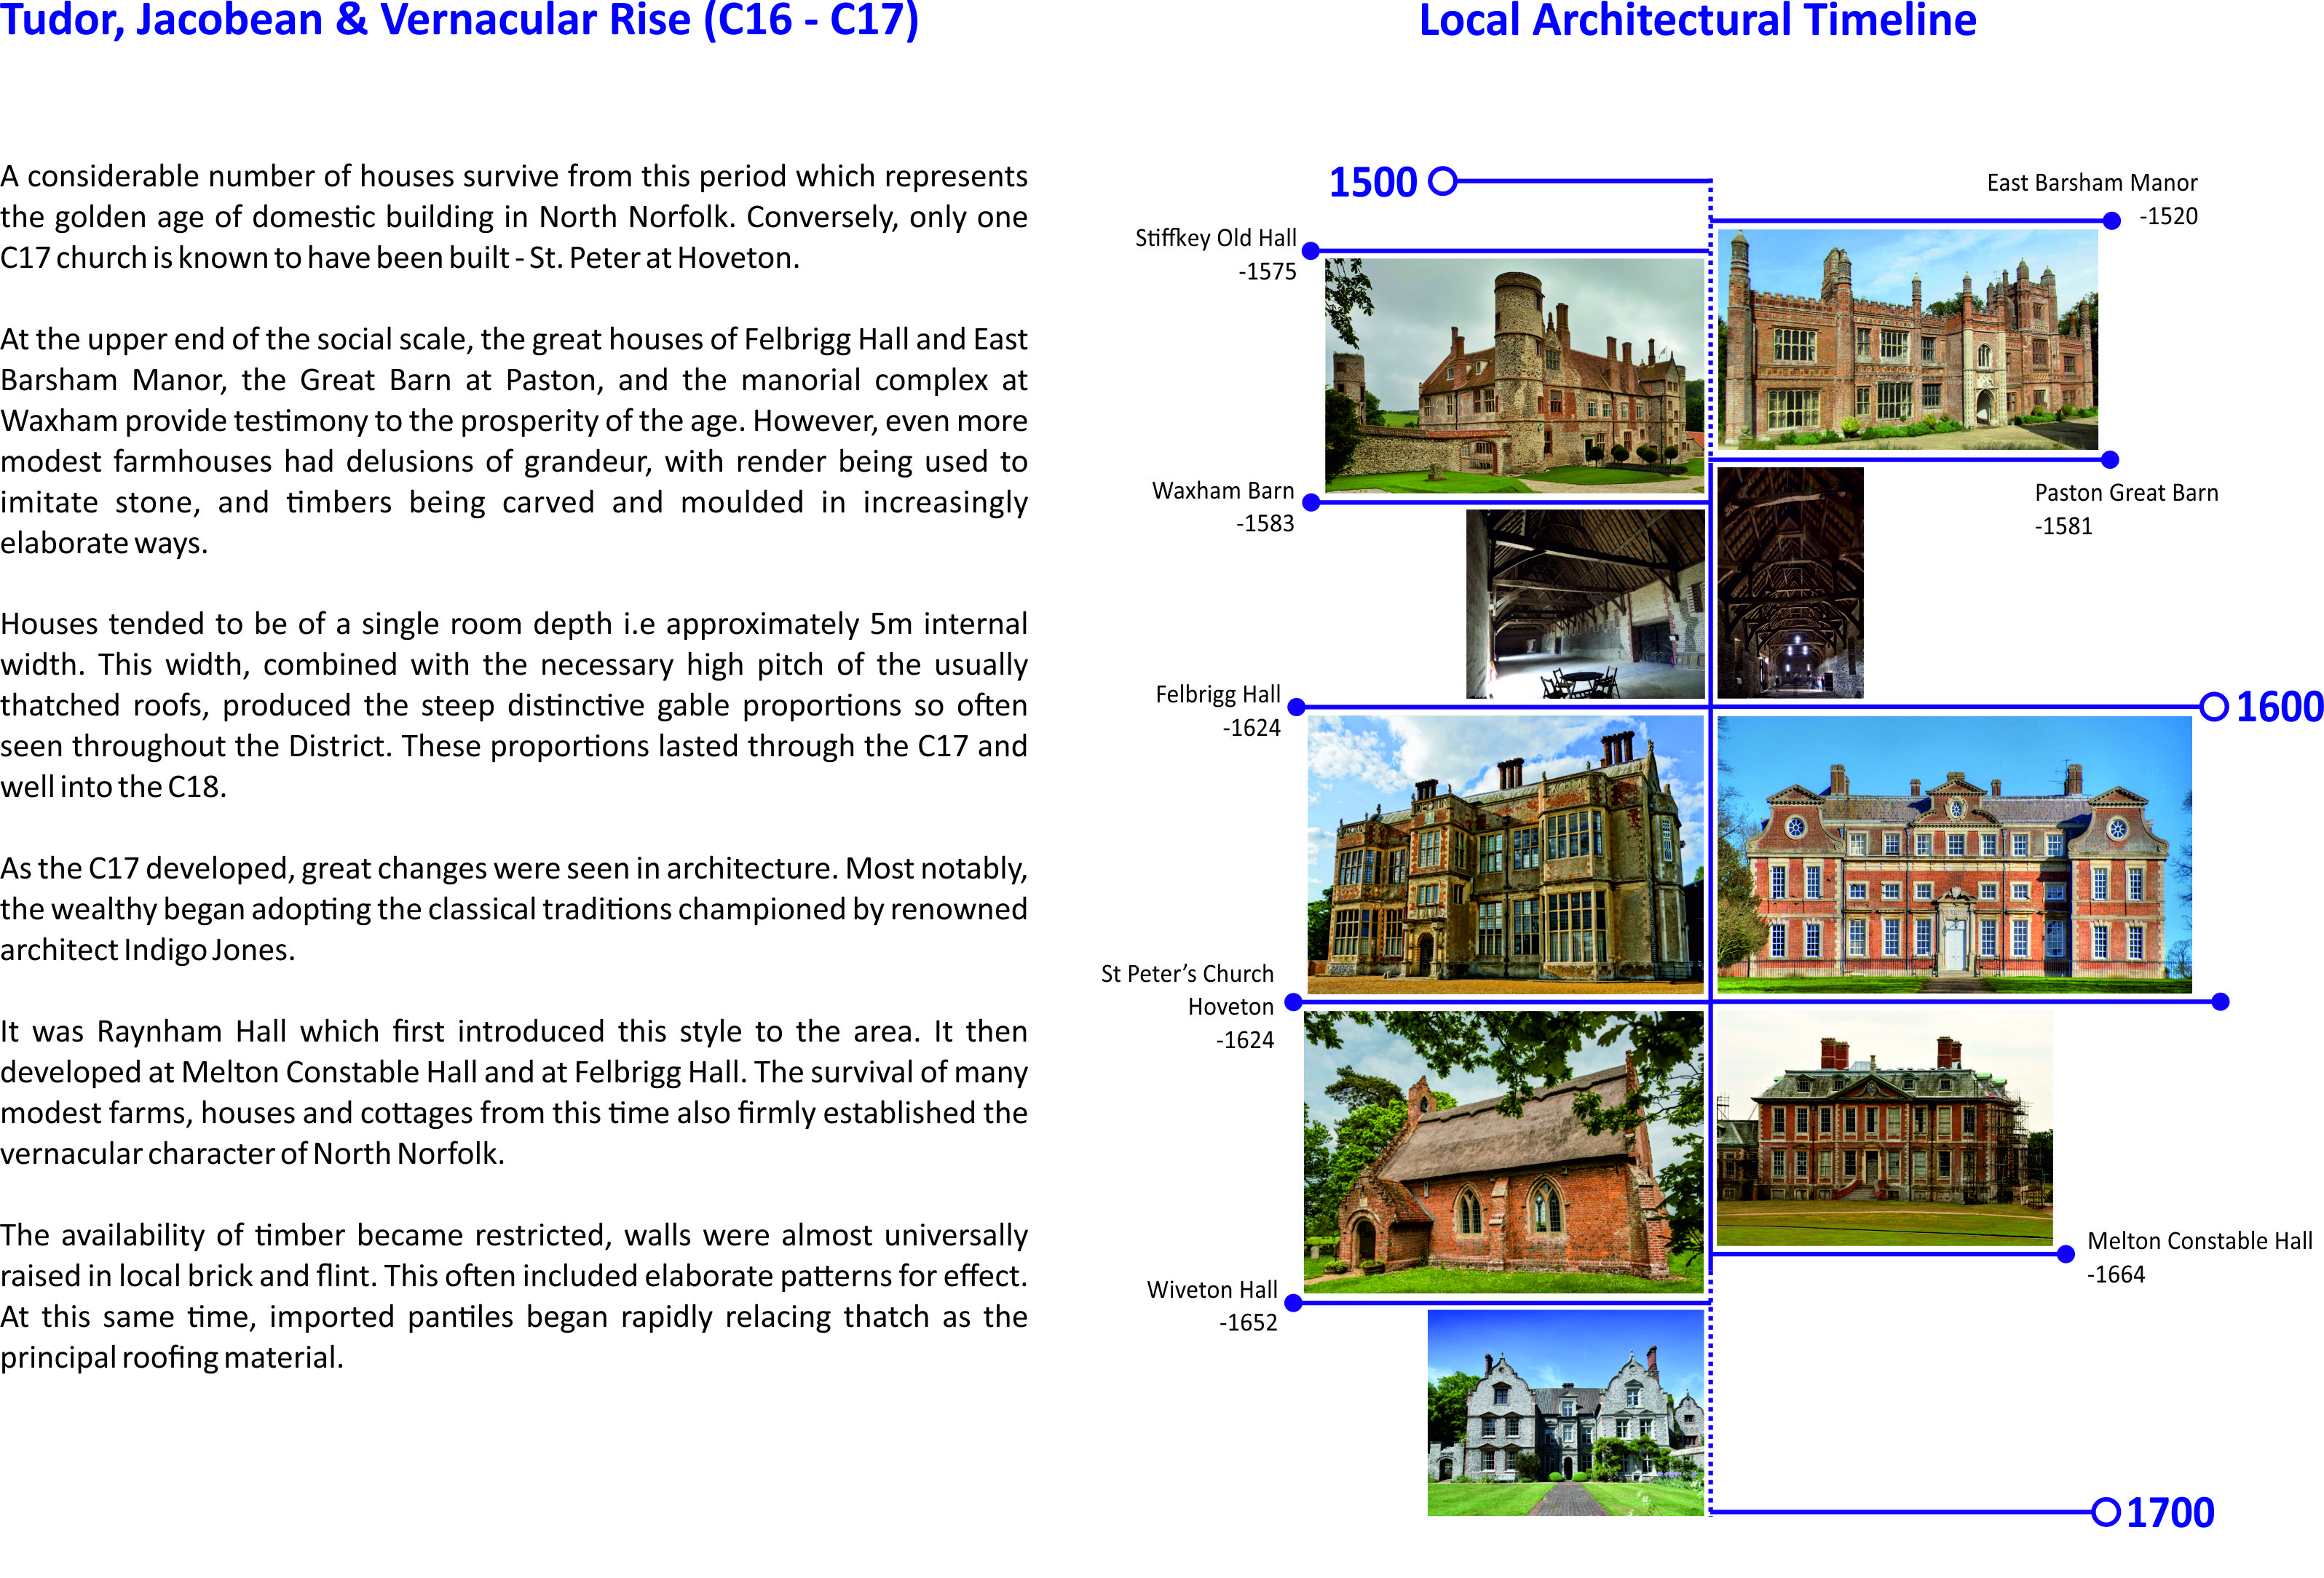 Tudor, Jacobean & Vernacular Rise Timeline